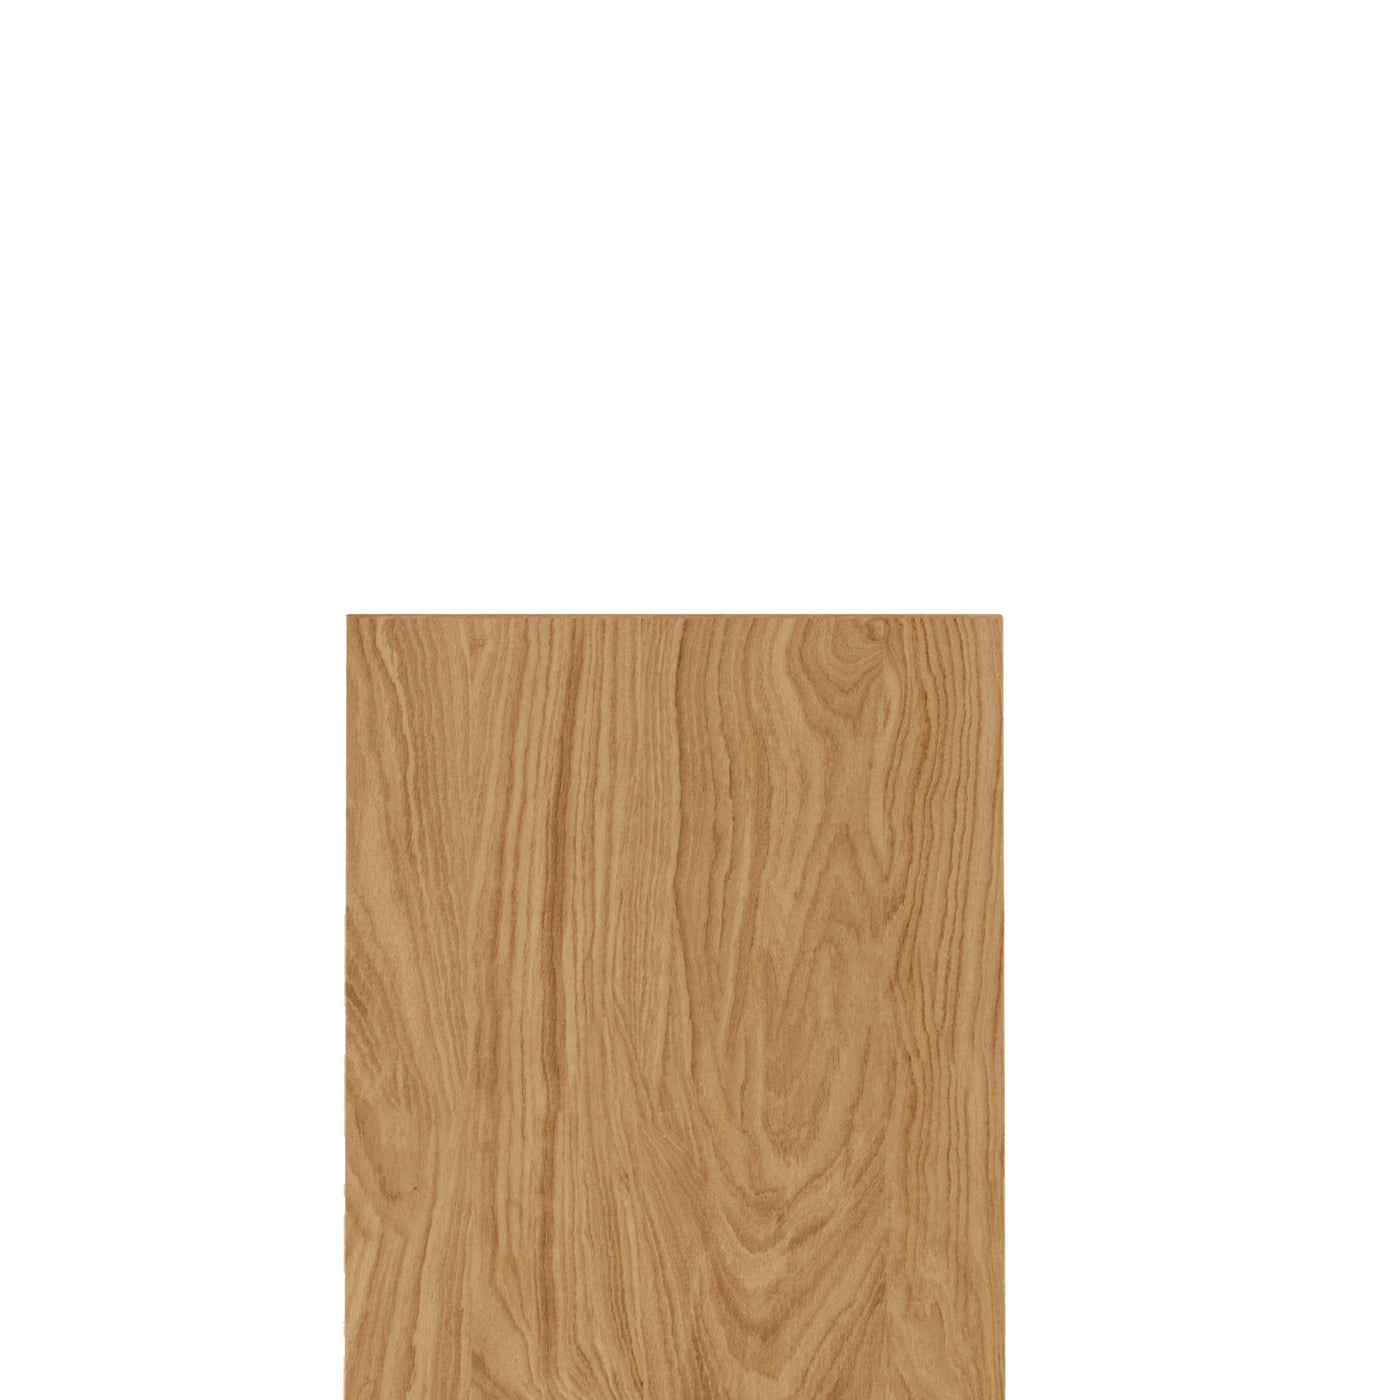 Floating Shelf- White Oak - 1.75 Inches Thick